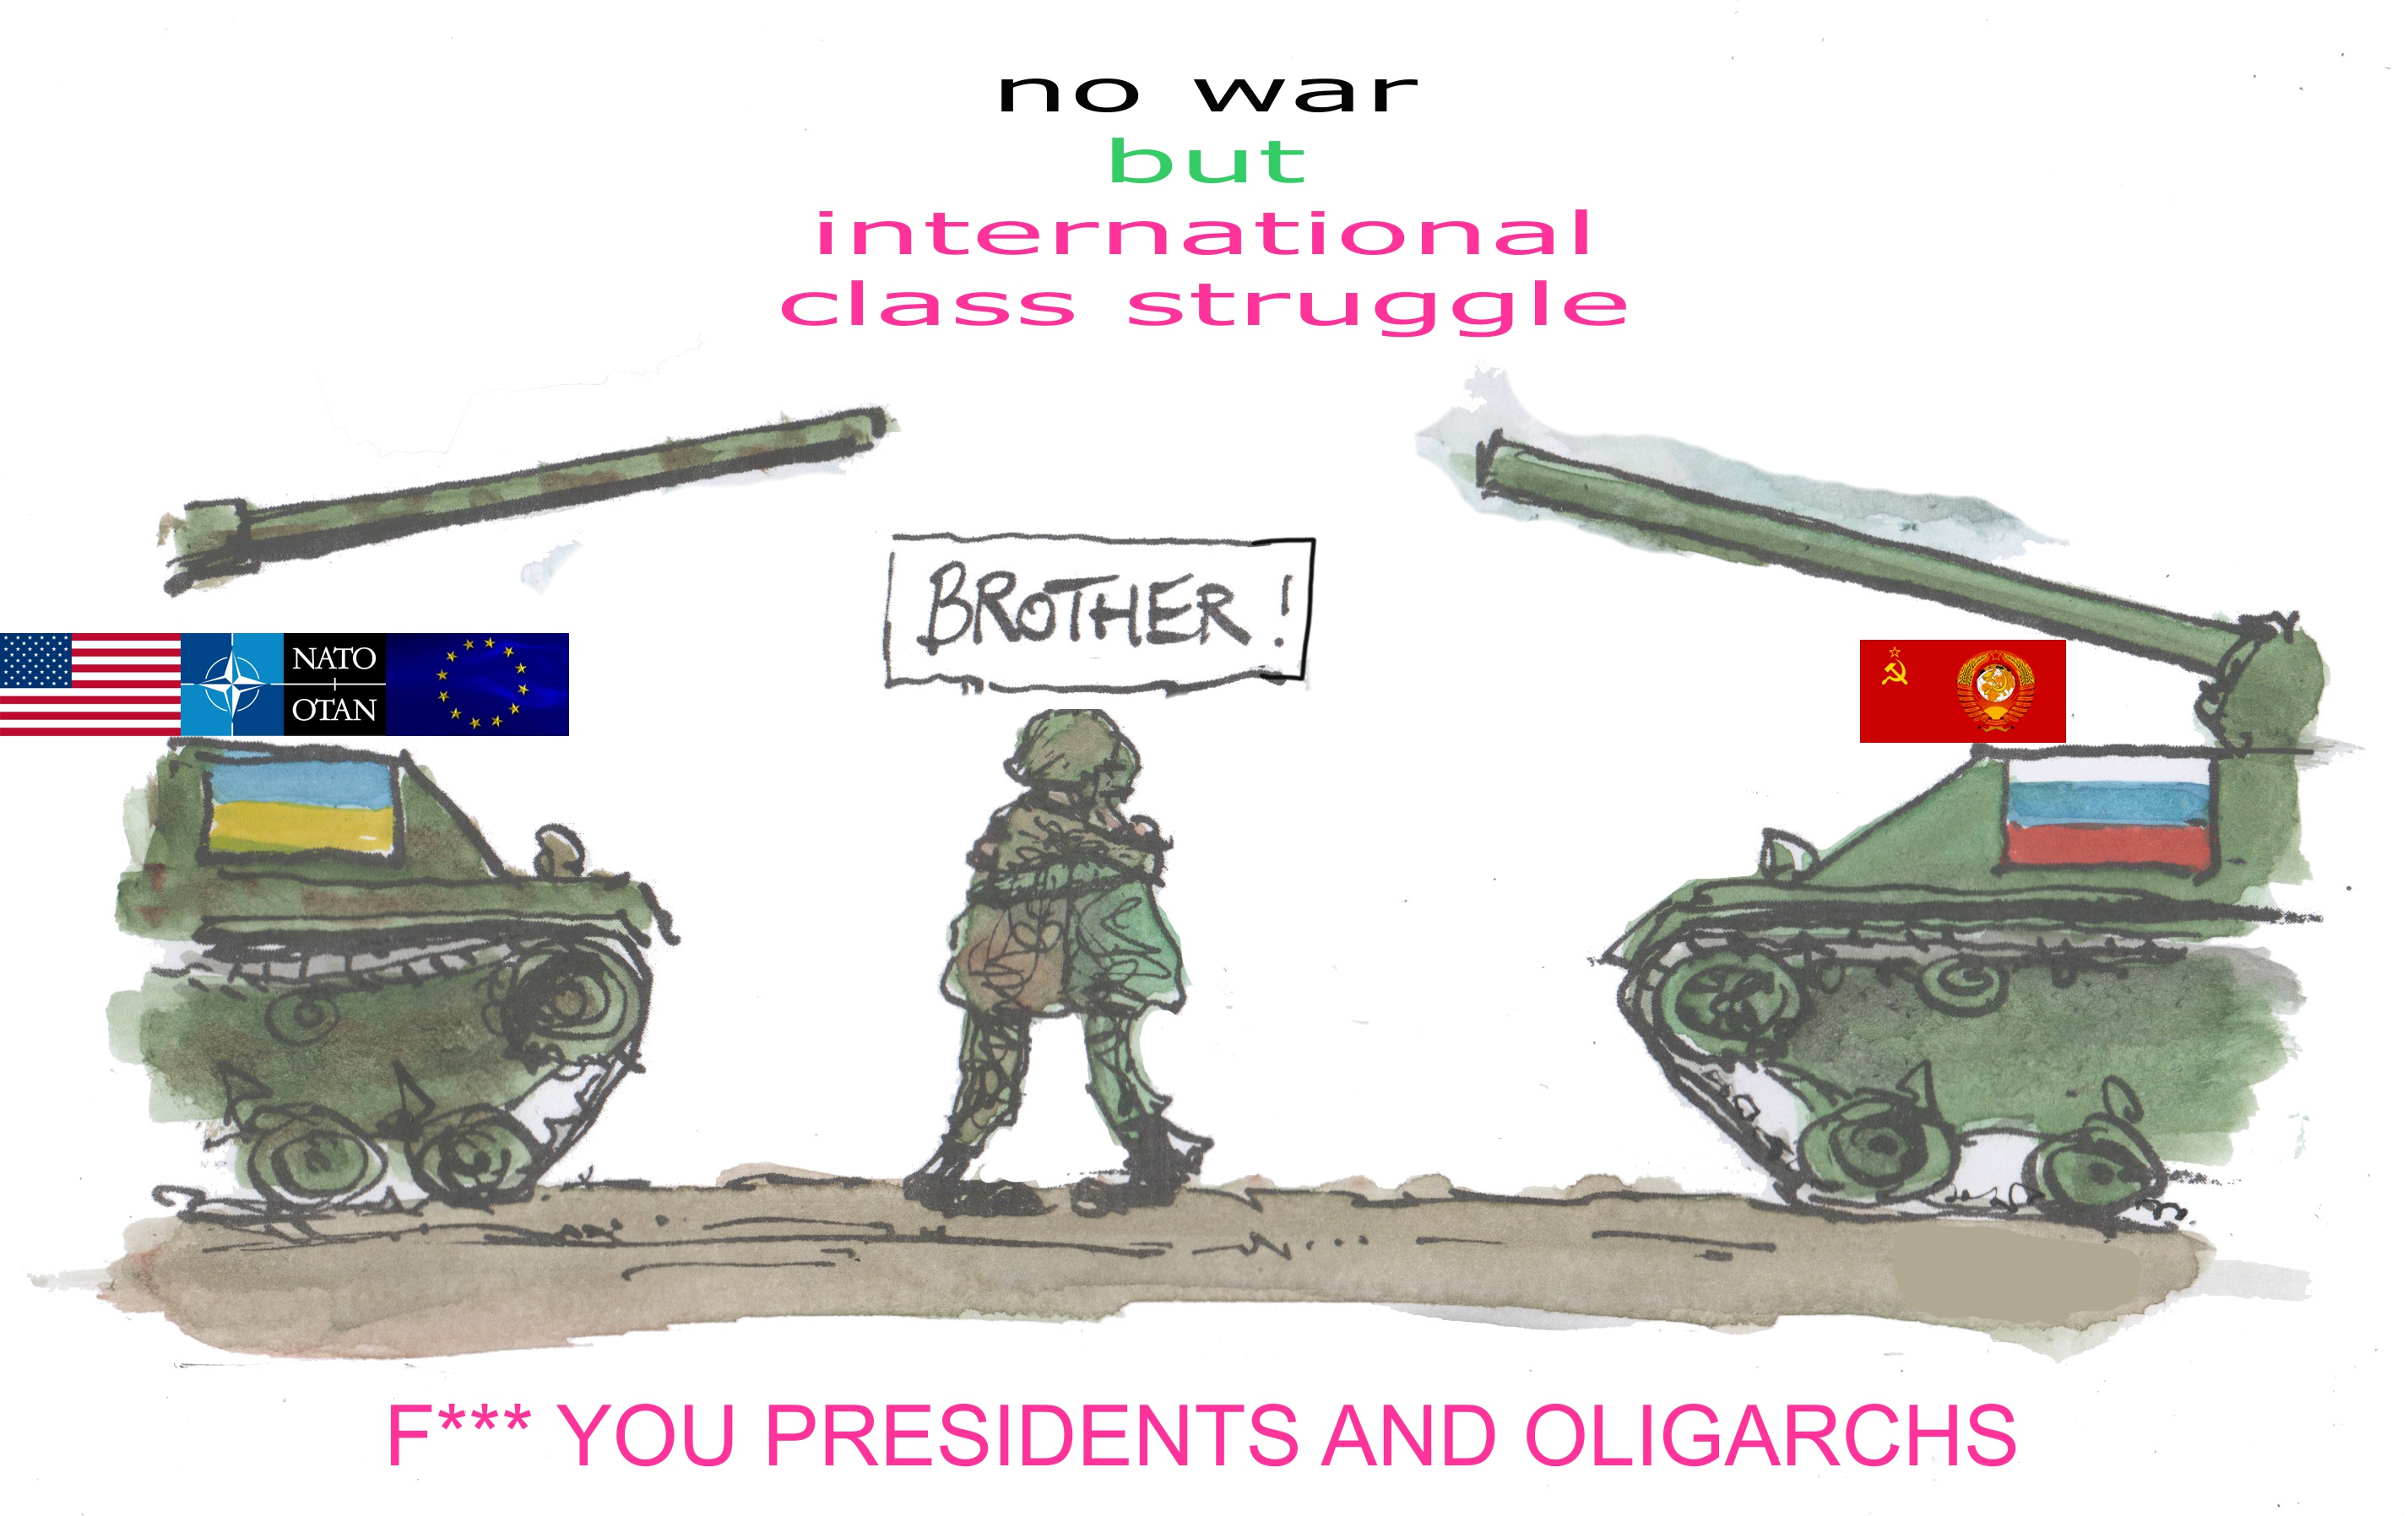 brother, no war but international class struggle #Ukraine